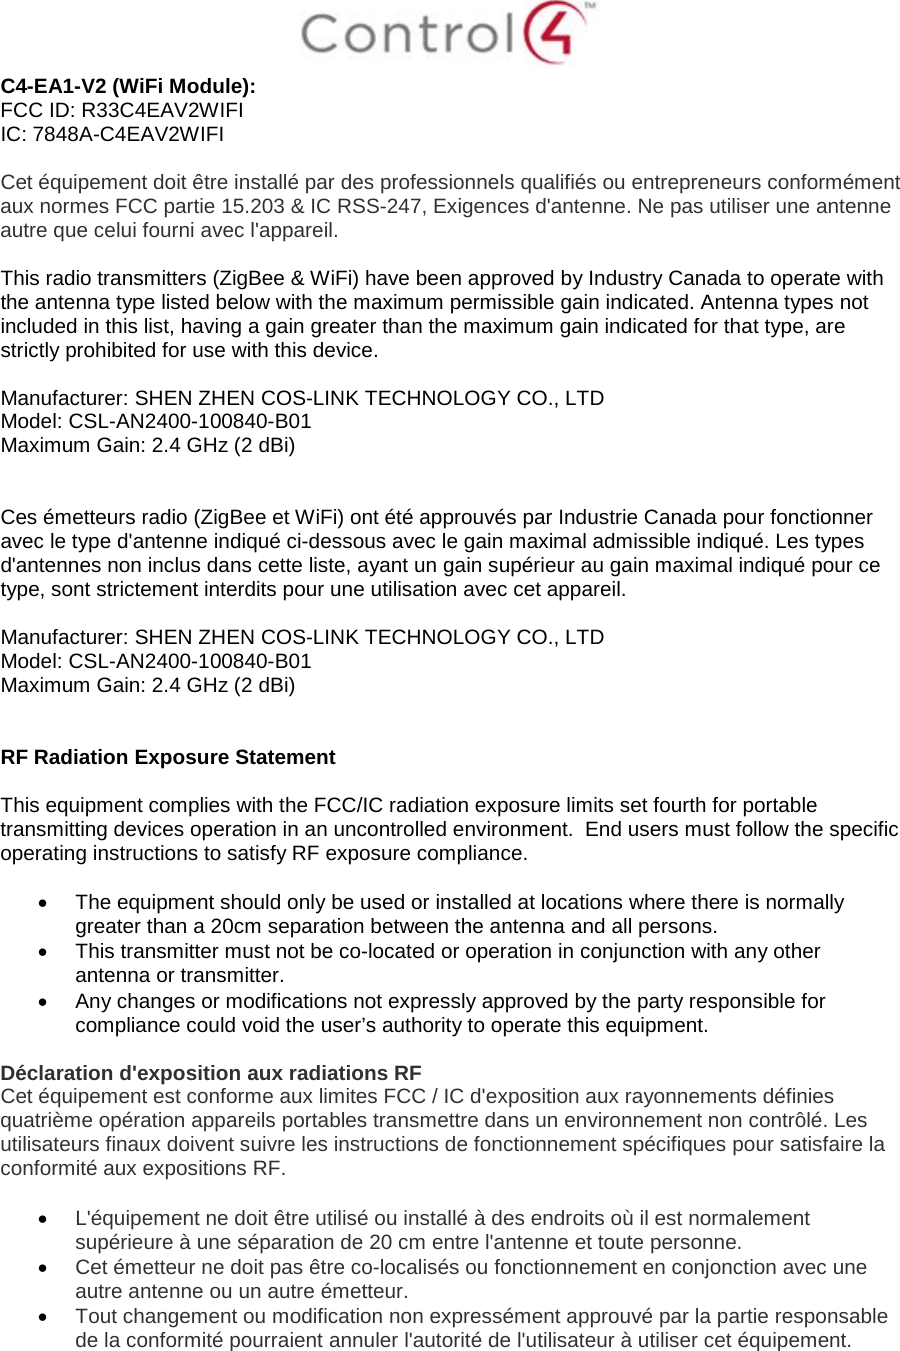  C4-EA1-V2 (WiFi Module): FCC ID: R33C4EAV2WIFI IC: 7848A-C4EAV2WIFI  Cet équipement doit être installé par des professionnels qualifiés ou entrepreneurs conformément aux normes FCC partie 15.203 &amp; IC RSS-247, Exigences d&apos;antenne. Ne pas utiliser une antenne autre que celui fourni avec l&apos;appareil.  This radio transmitters (ZigBee &amp; WiFi) have been approved by Industry Canada to operate with the antenna type listed below with the maximum permissible gain indicated. Antenna types not included in this list, having a gain greater than the maximum gain indicated for that type, are strictly prohibited for use with this device.  Manufacturer: SHEN ZHEN COS-LINK TECHNOLOGY CO., LTD  Model: CSL-AN2400-100840-B01 Maximum Gain: 2.4 GHz (2 dBi)    Ces émetteurs radio (ZigBee et WiFi) ont été approuvés par Industrie Canada pour fonctionner avec le type d&apos;antenne indiqué ci-dessous avec le gain maximal admissible indiqué. Les types d&apos;antennes non inclus dans cette liste, ayant un gain supérieur au gain maximal indiqué pour ce type, sont strictement interdits pour une utilisation avec cet appareil.  Manufacturer: SHEN ZHEN COS-LINK TECHNOLOGY CO., LTD  Model: CSL-AN2400-100840-B01 Maximum Gain: 2.4 GHz (2 dBi)   RF Radiation Exposure Statement  This equipment complies with the FCC/IC radiation exposure limits set fourth for portable transmitting devices operation in an uncontrolled environment.  End users must follow the specific operating instructions to satisfy RF exposure compliance.  • The equipment should only be used or installed at locations where there is normally greater than a 20cm separation between the antenna and all persons. • This transmitter must not be co-located or operation in conjunction with any other antenna or transmitter. • Any changes or modifications not expressly approved by the party responsible for compliance could void the user’s authority to operate this equipment.  Déclaration d&apos;exposition aux radiations RF Cet équipement est conforme aux limites FCC / IC d&apos;exposition aux rayonnements définies quatrième opération appareils portables transmettre dans un environnement non contrôlé. Les utilisateurs finaux doivent suivre les instructions de fonctionnement spécifiques pour satisfaire la conformité aux expositions RF.  • L&apos;équipement ne doit être utilisé ou installé à des endroits où il est normalement supérieure à une séparation de 20 cm entre l&apos;antenne et toute personne. • Cet émetteur ne doit pas être co-localisés ou fonctionnement en conjonction avec une autre antenne ou un autre émetteur. • Tout changement ou modification non expressément approuvé par la partie responsable de la conformité pourraient annuler l&apos;autorité de l&apos;utilisateur à utiliser cet équipement.   